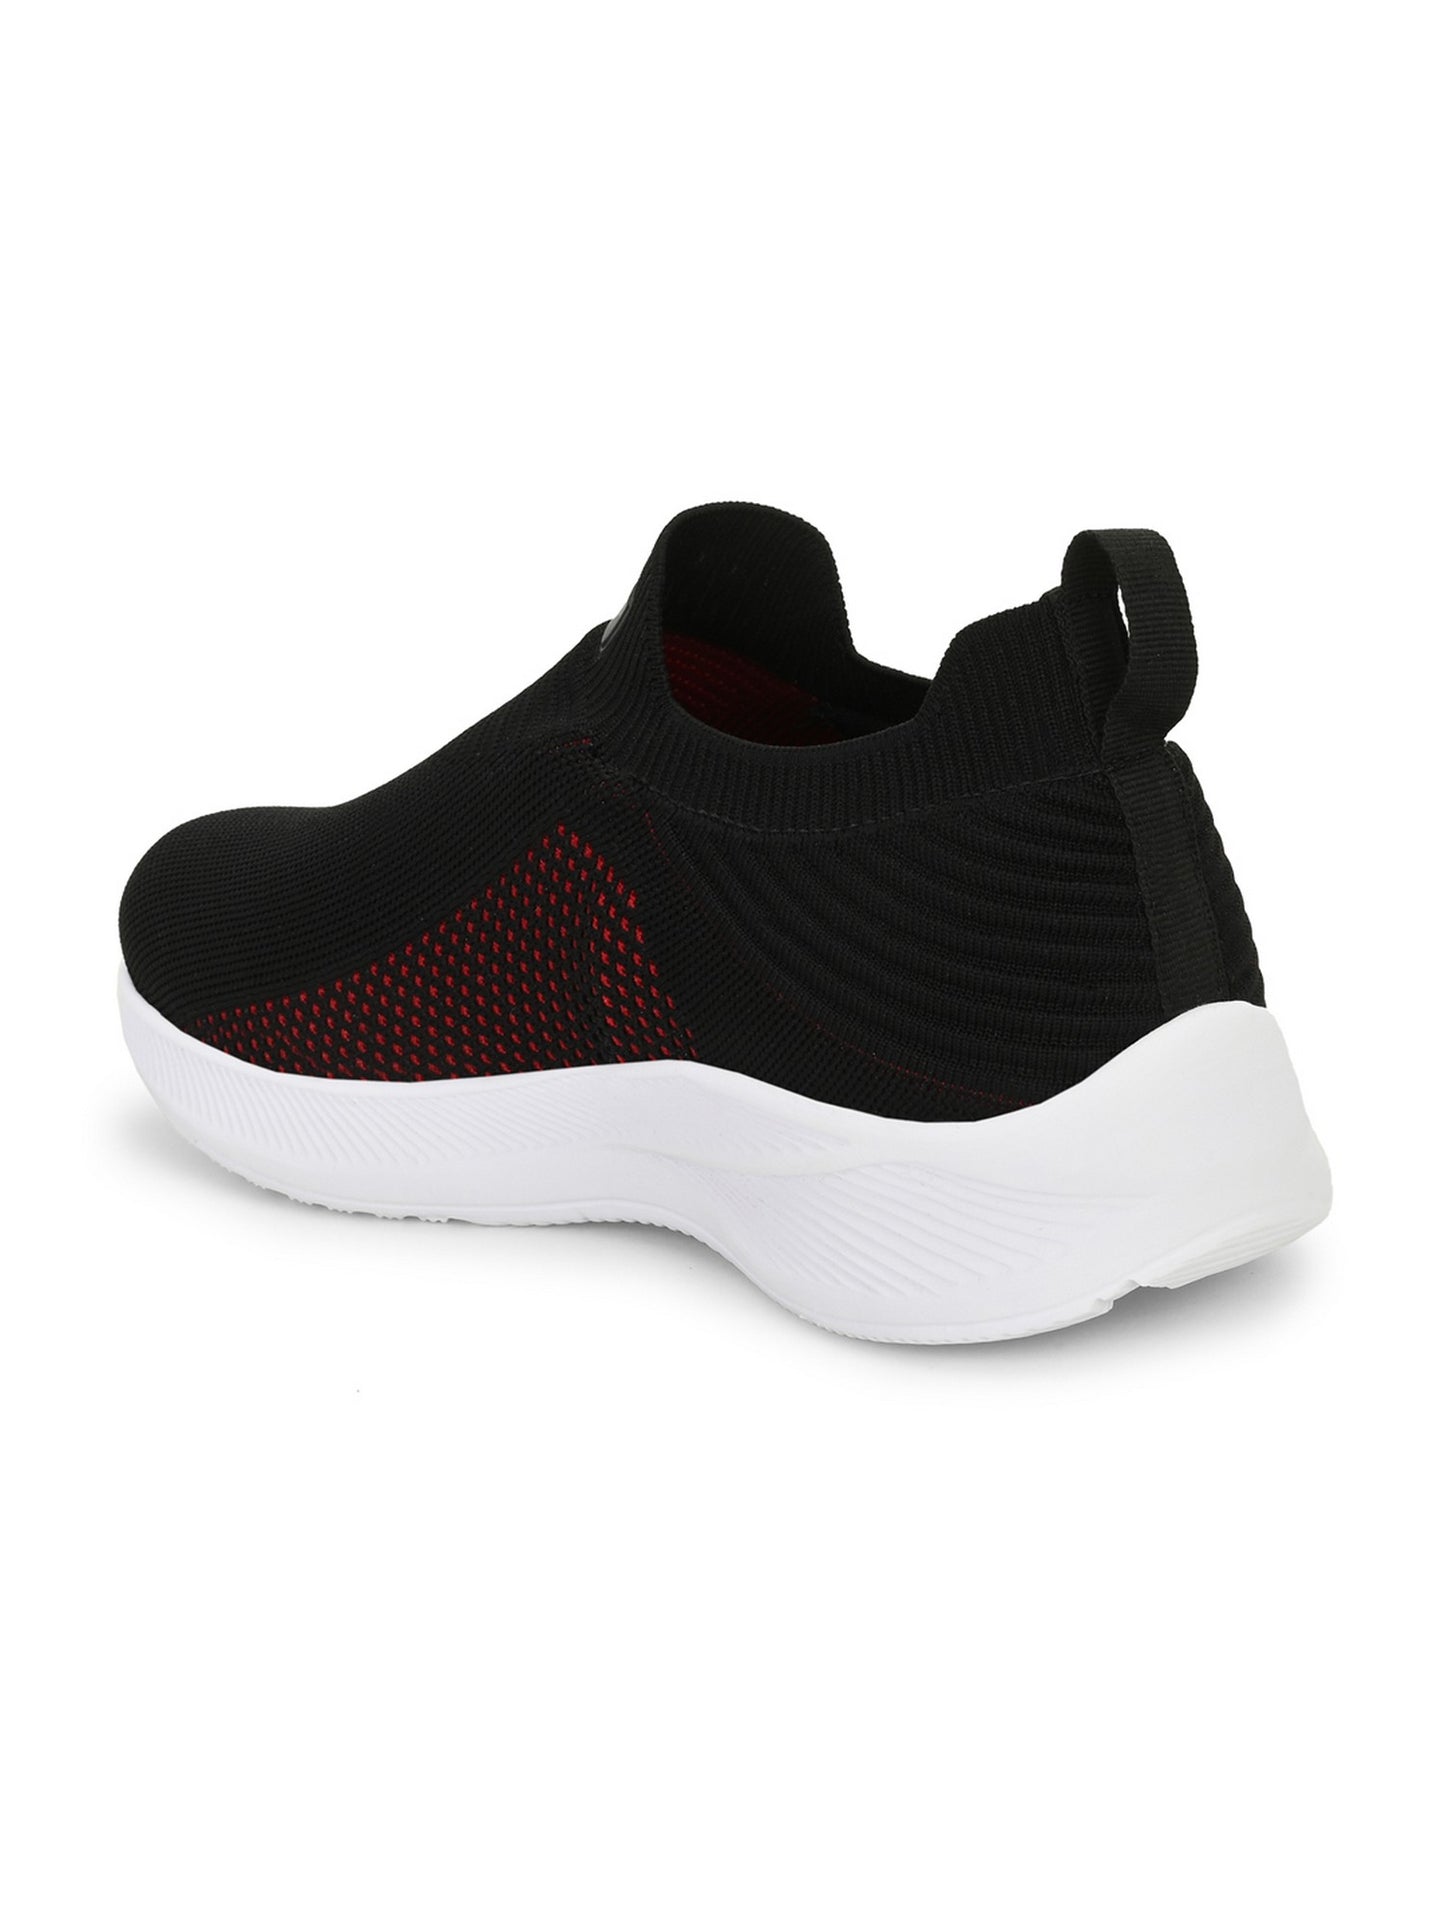 Hirolas® Men's  GlideFit Sports Running Shoes.- Black/Red HRL2080BLR